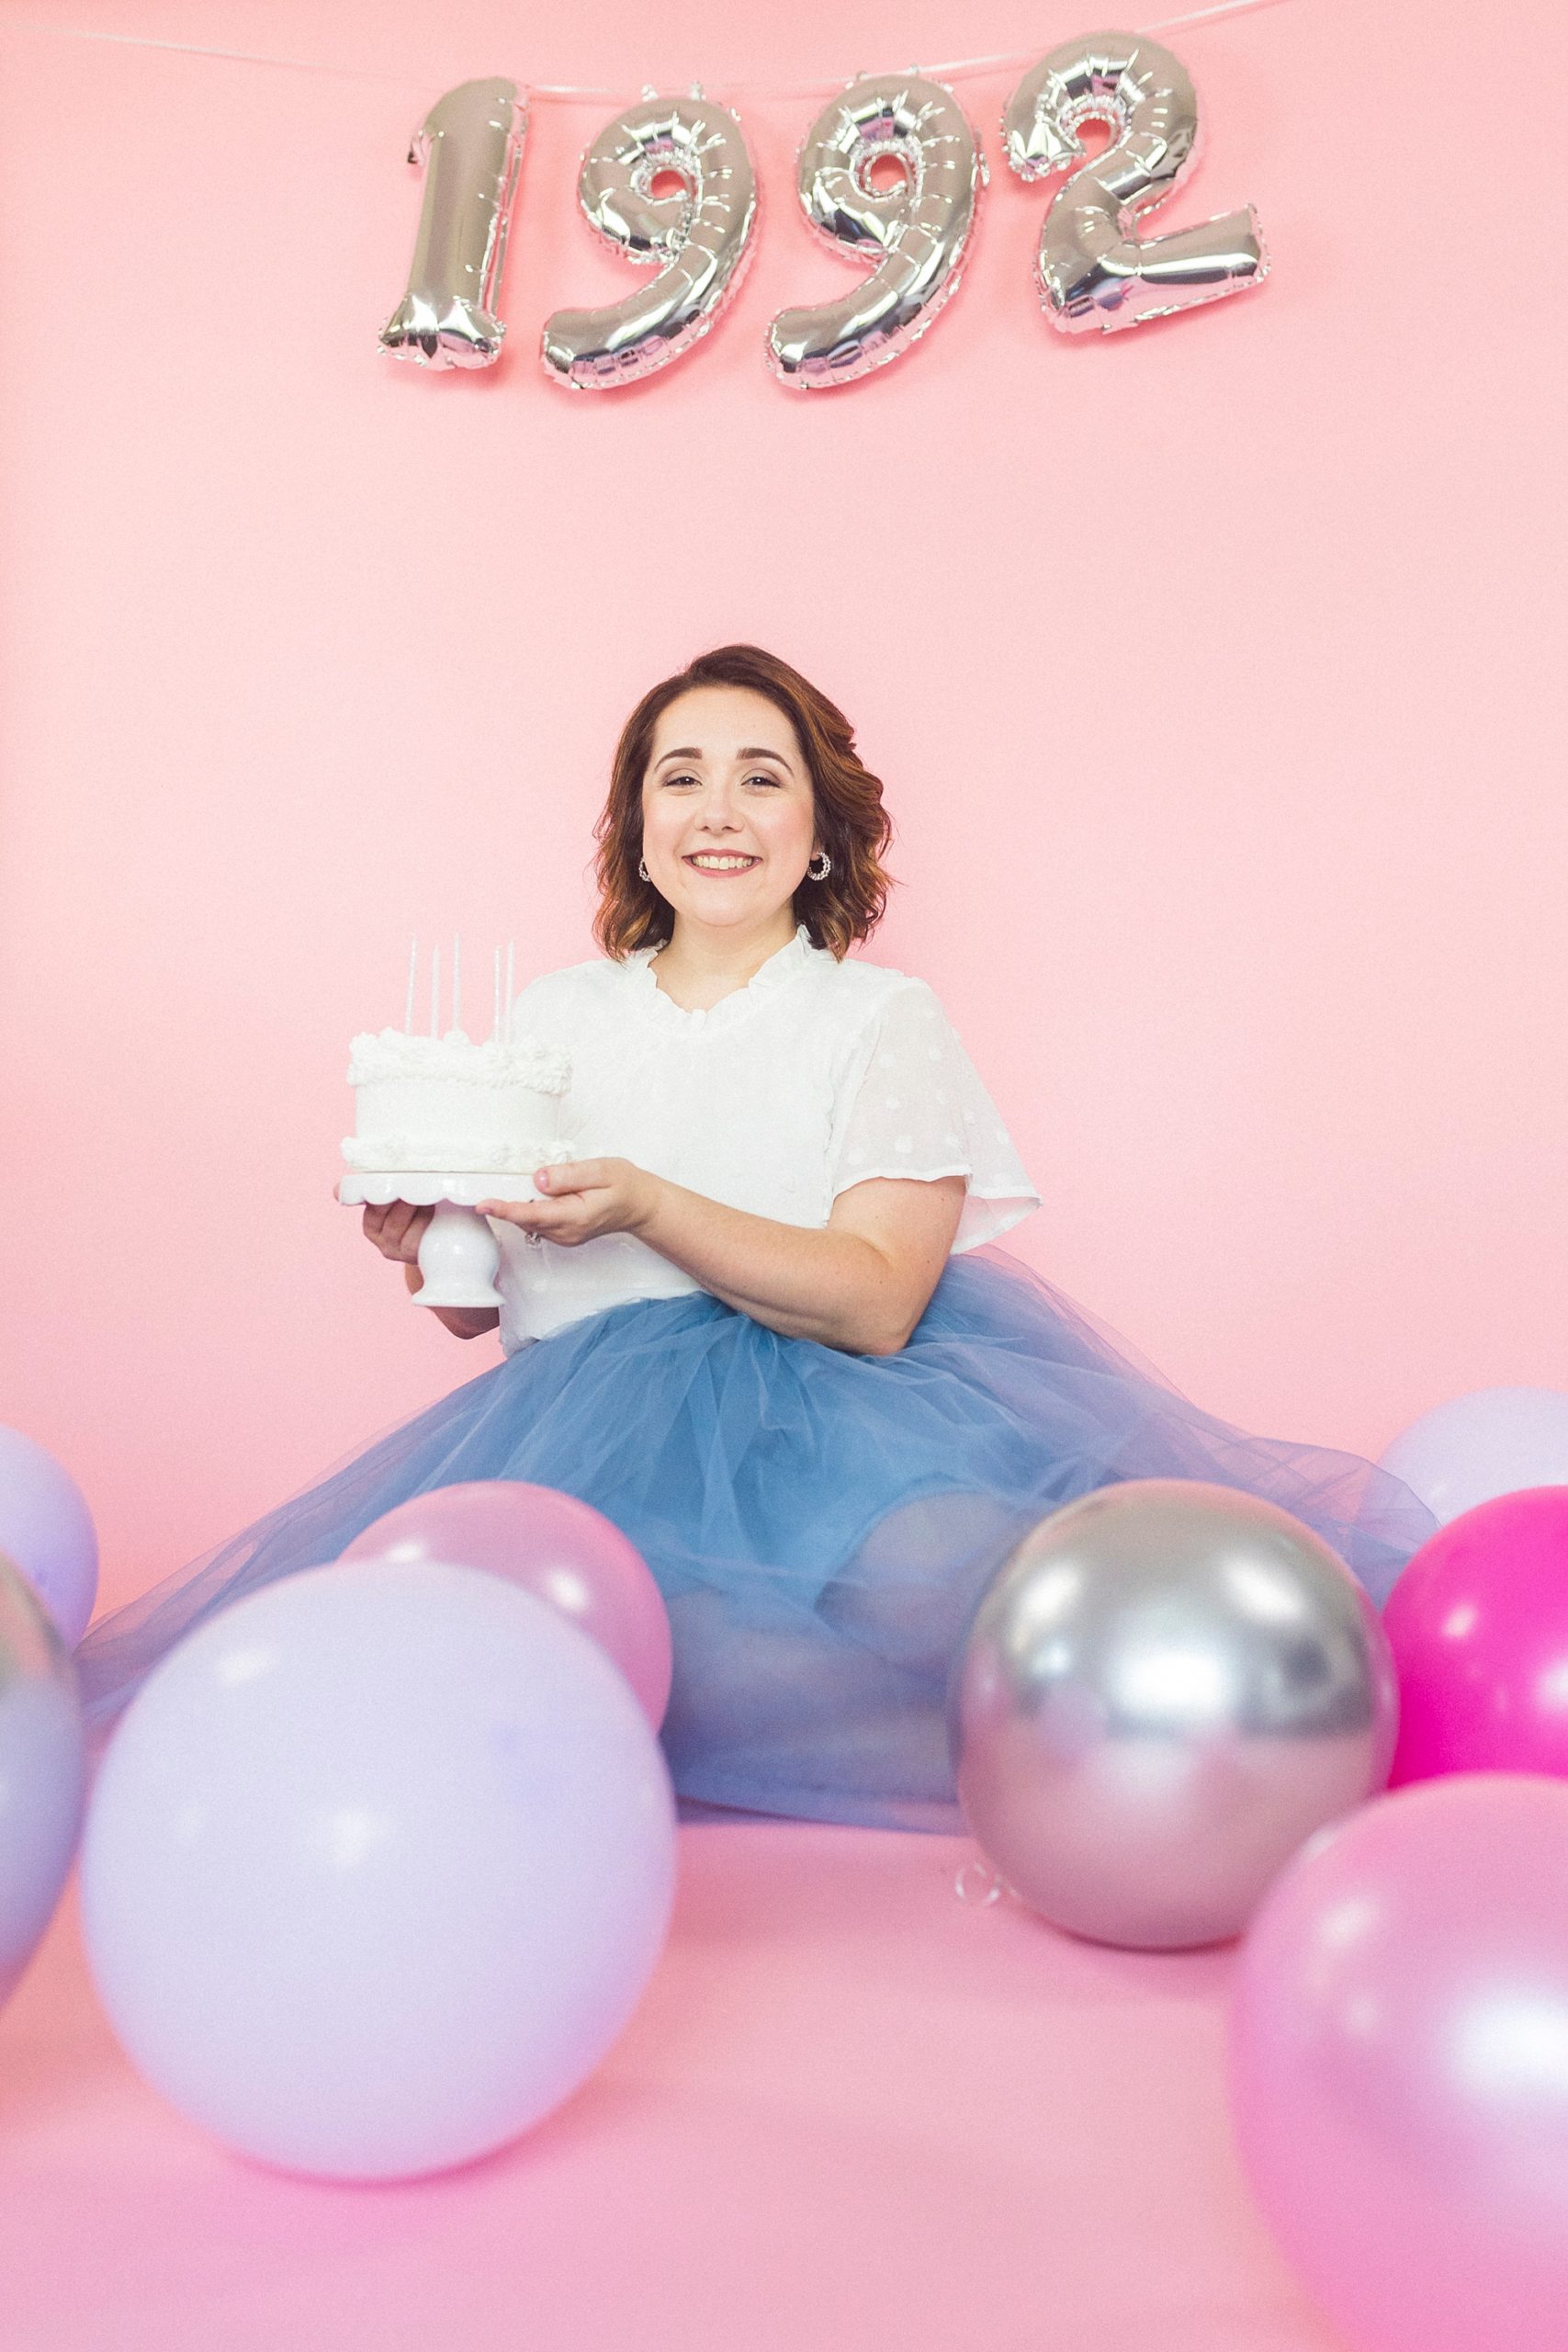 birthday girl holds cake during 30th birthday portraits 